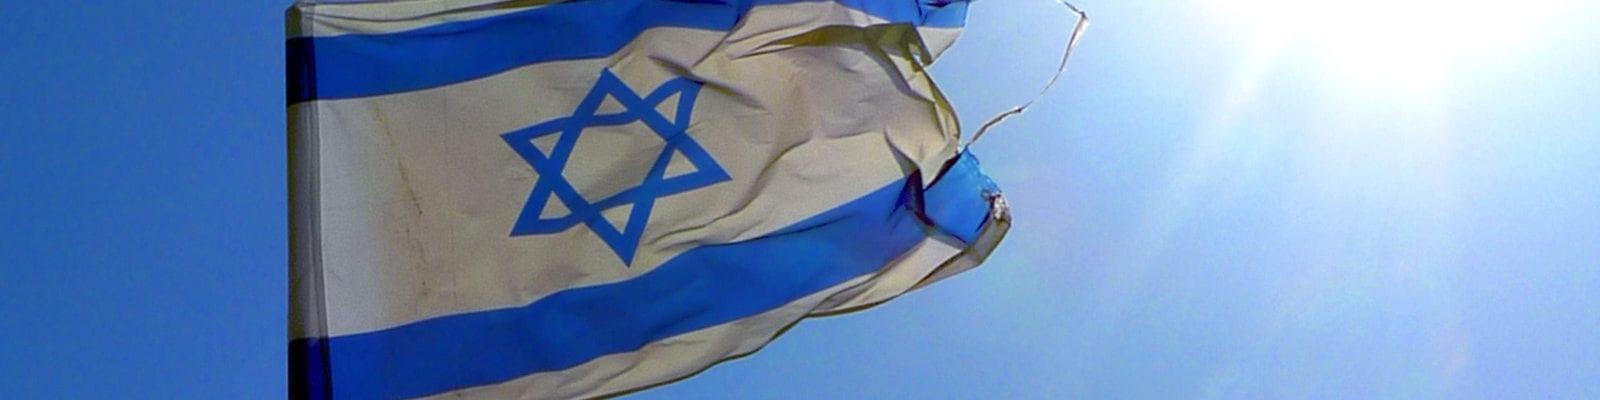 The flag of Israel flies under a sunny, blue sky.